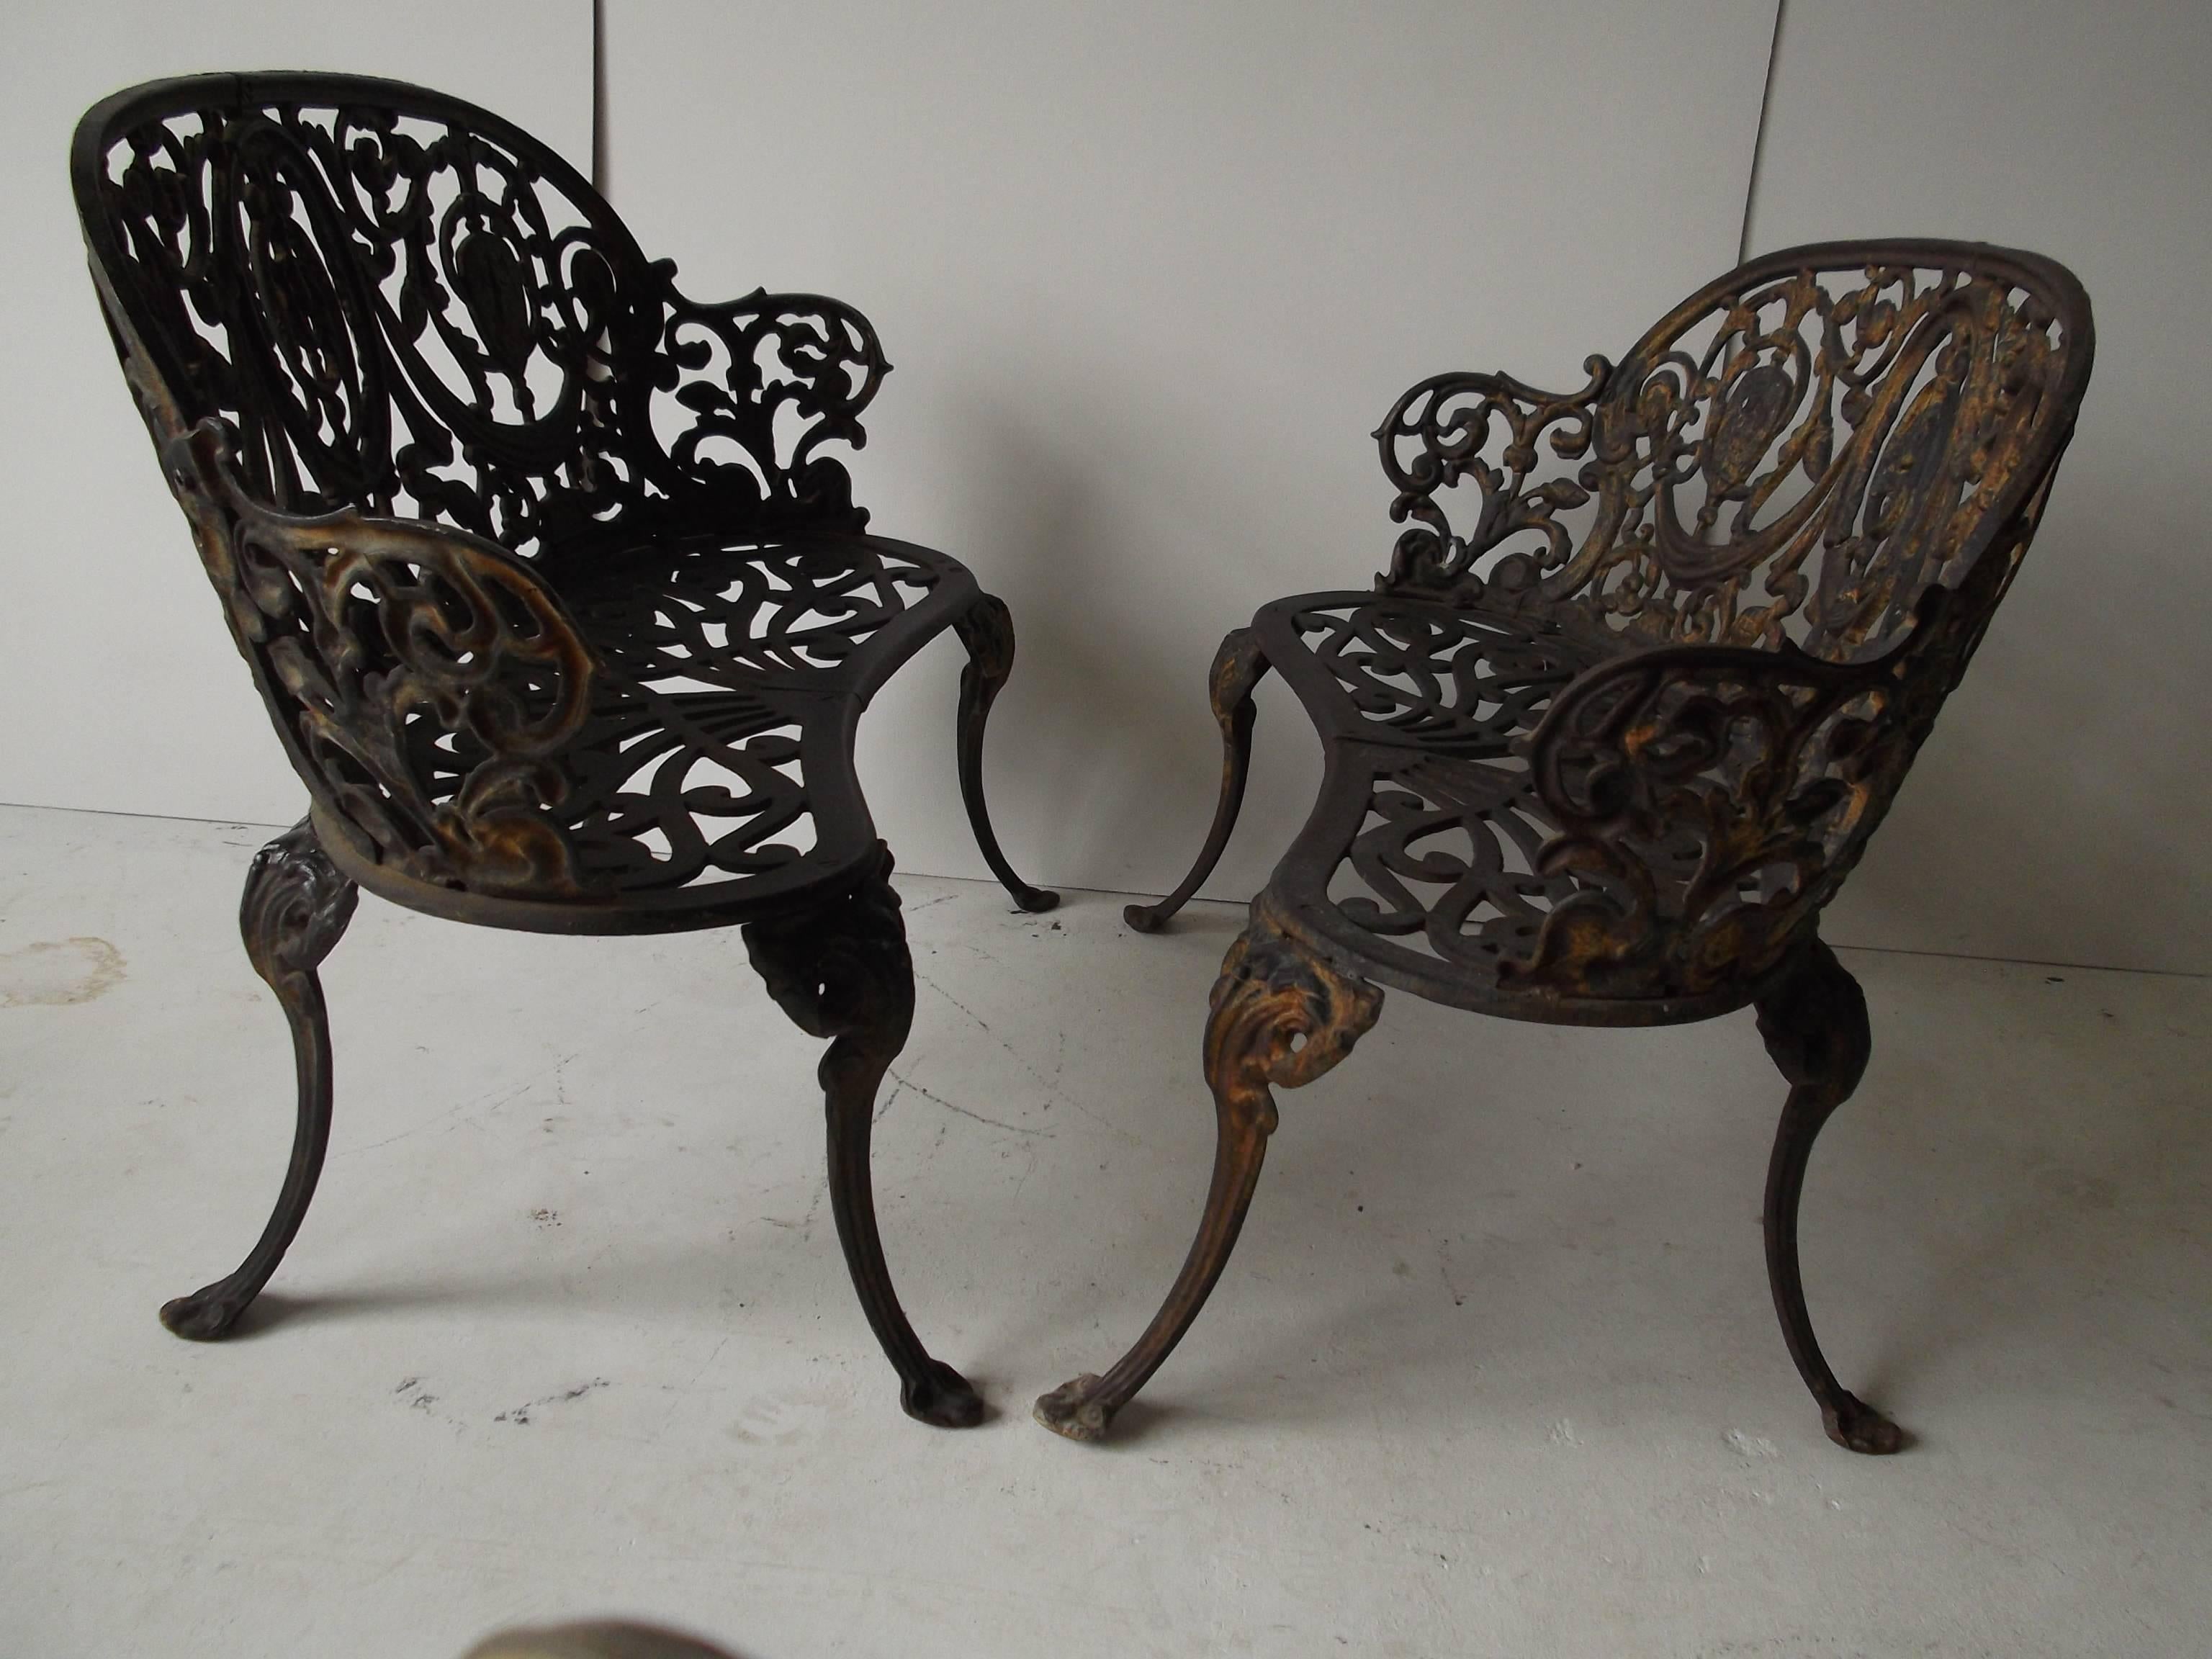 Pair of Antique Ornate Cast Iron Diminutive Garden Bench Seats 4